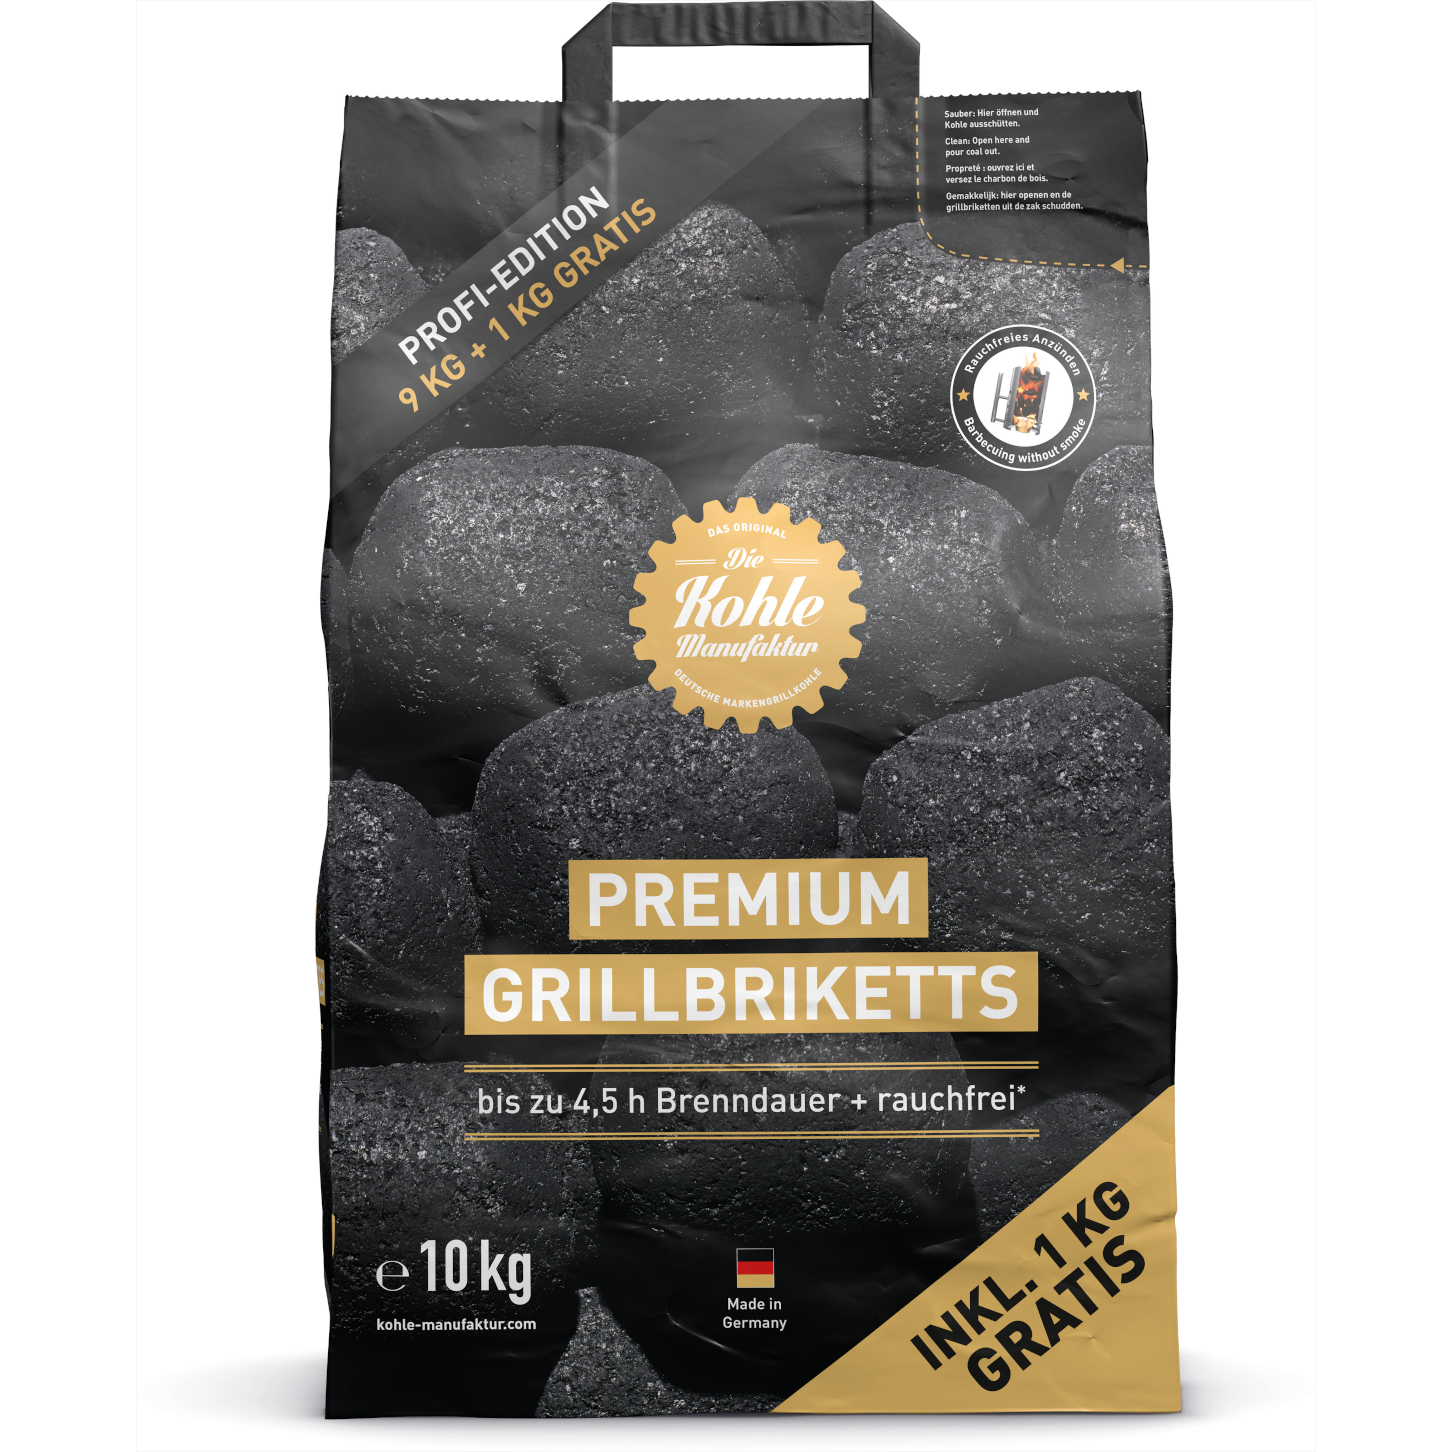 Die Kohle-Manufaktur Premium-Grillbriketts 9+1 kg gratis